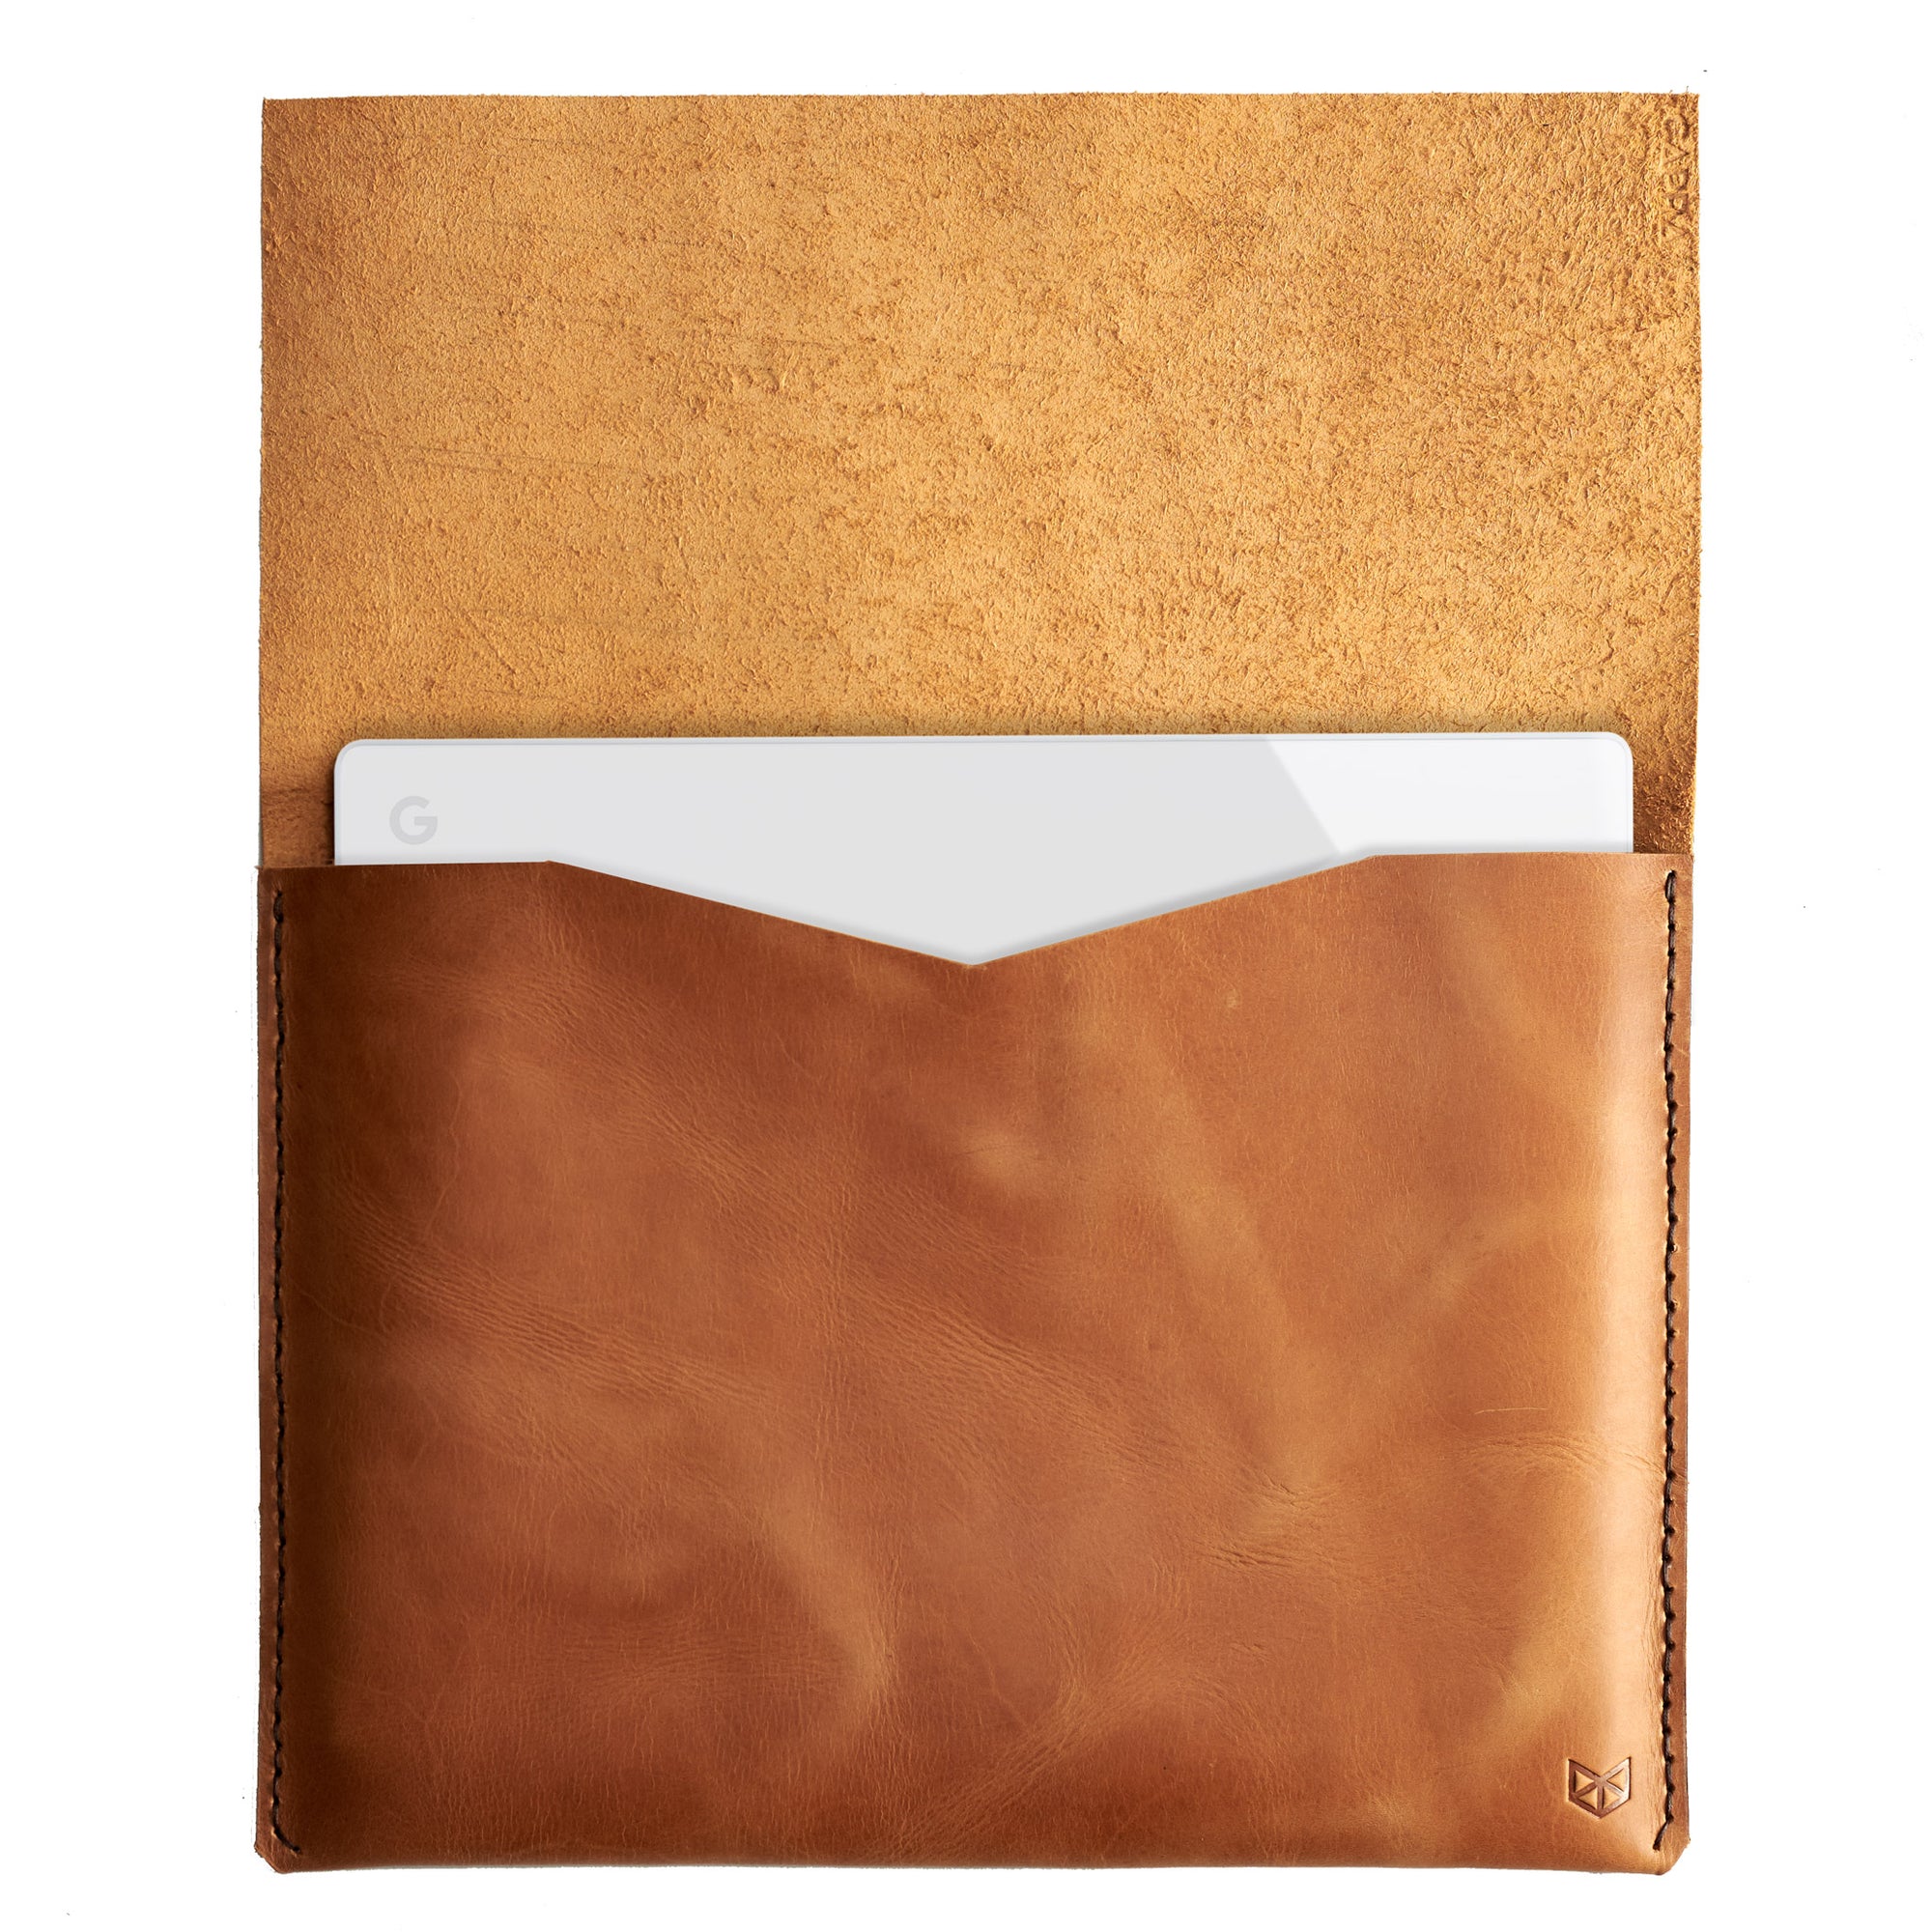 Open. Soft interior. Light Brown leather Google Pixelbook Sleeve Case